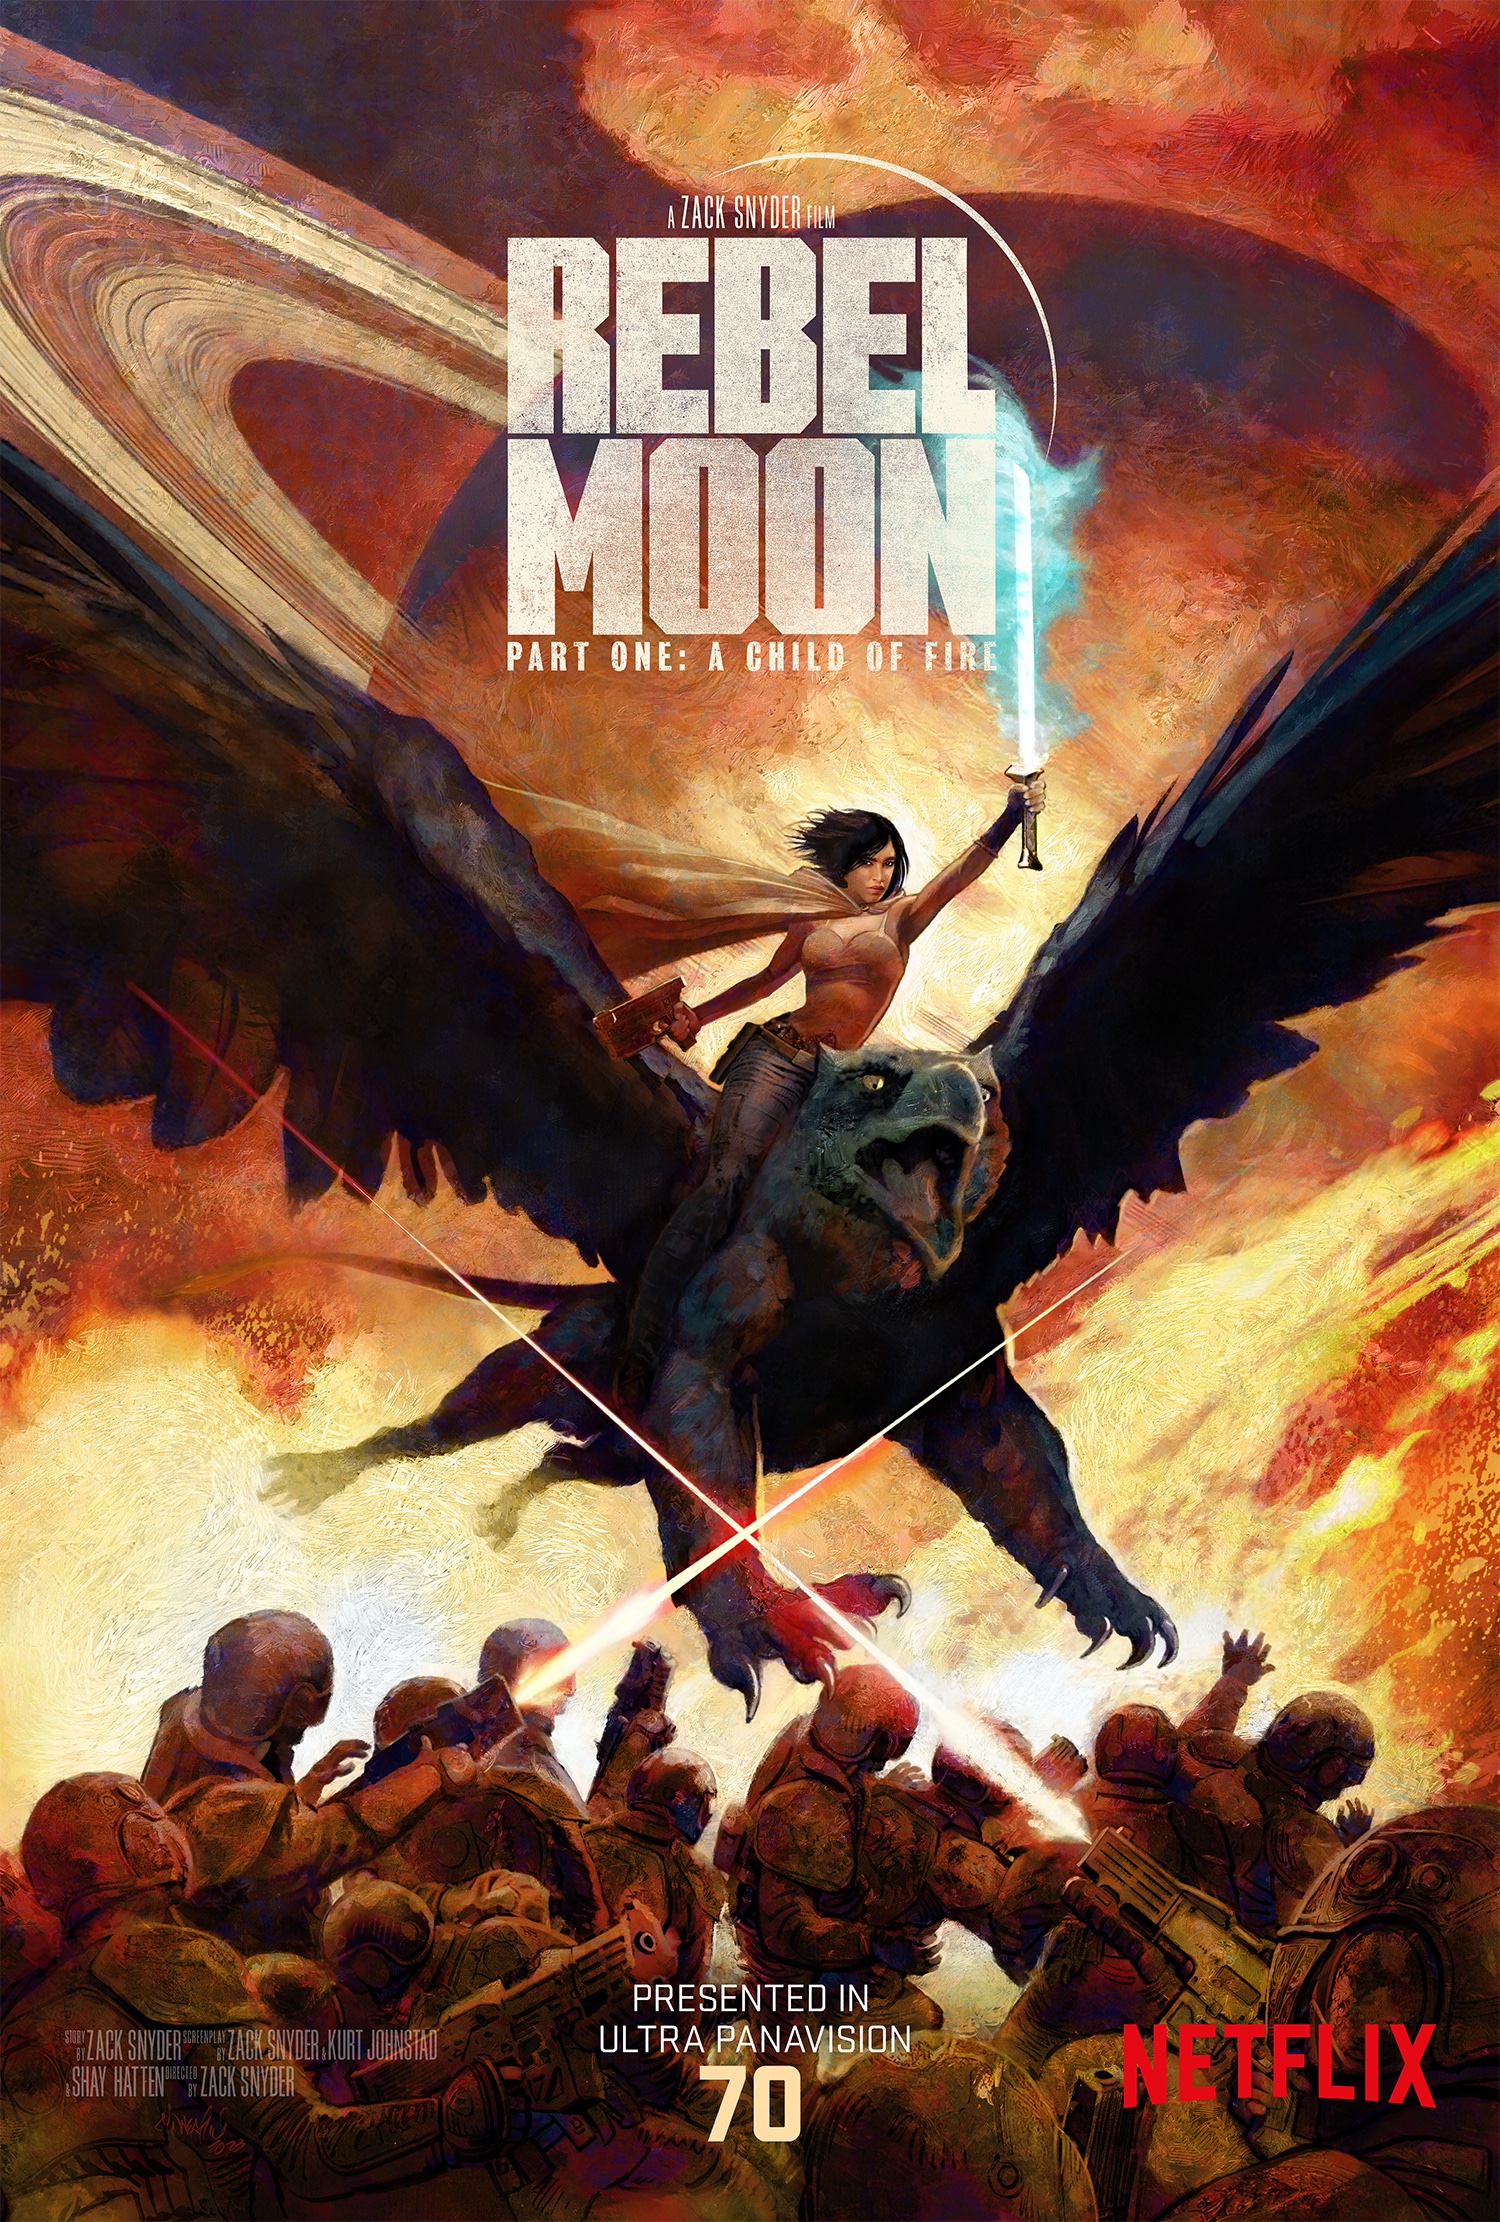 Rebel Moon Part 1: A Child of Fire por V. Castro - Audiolivro 